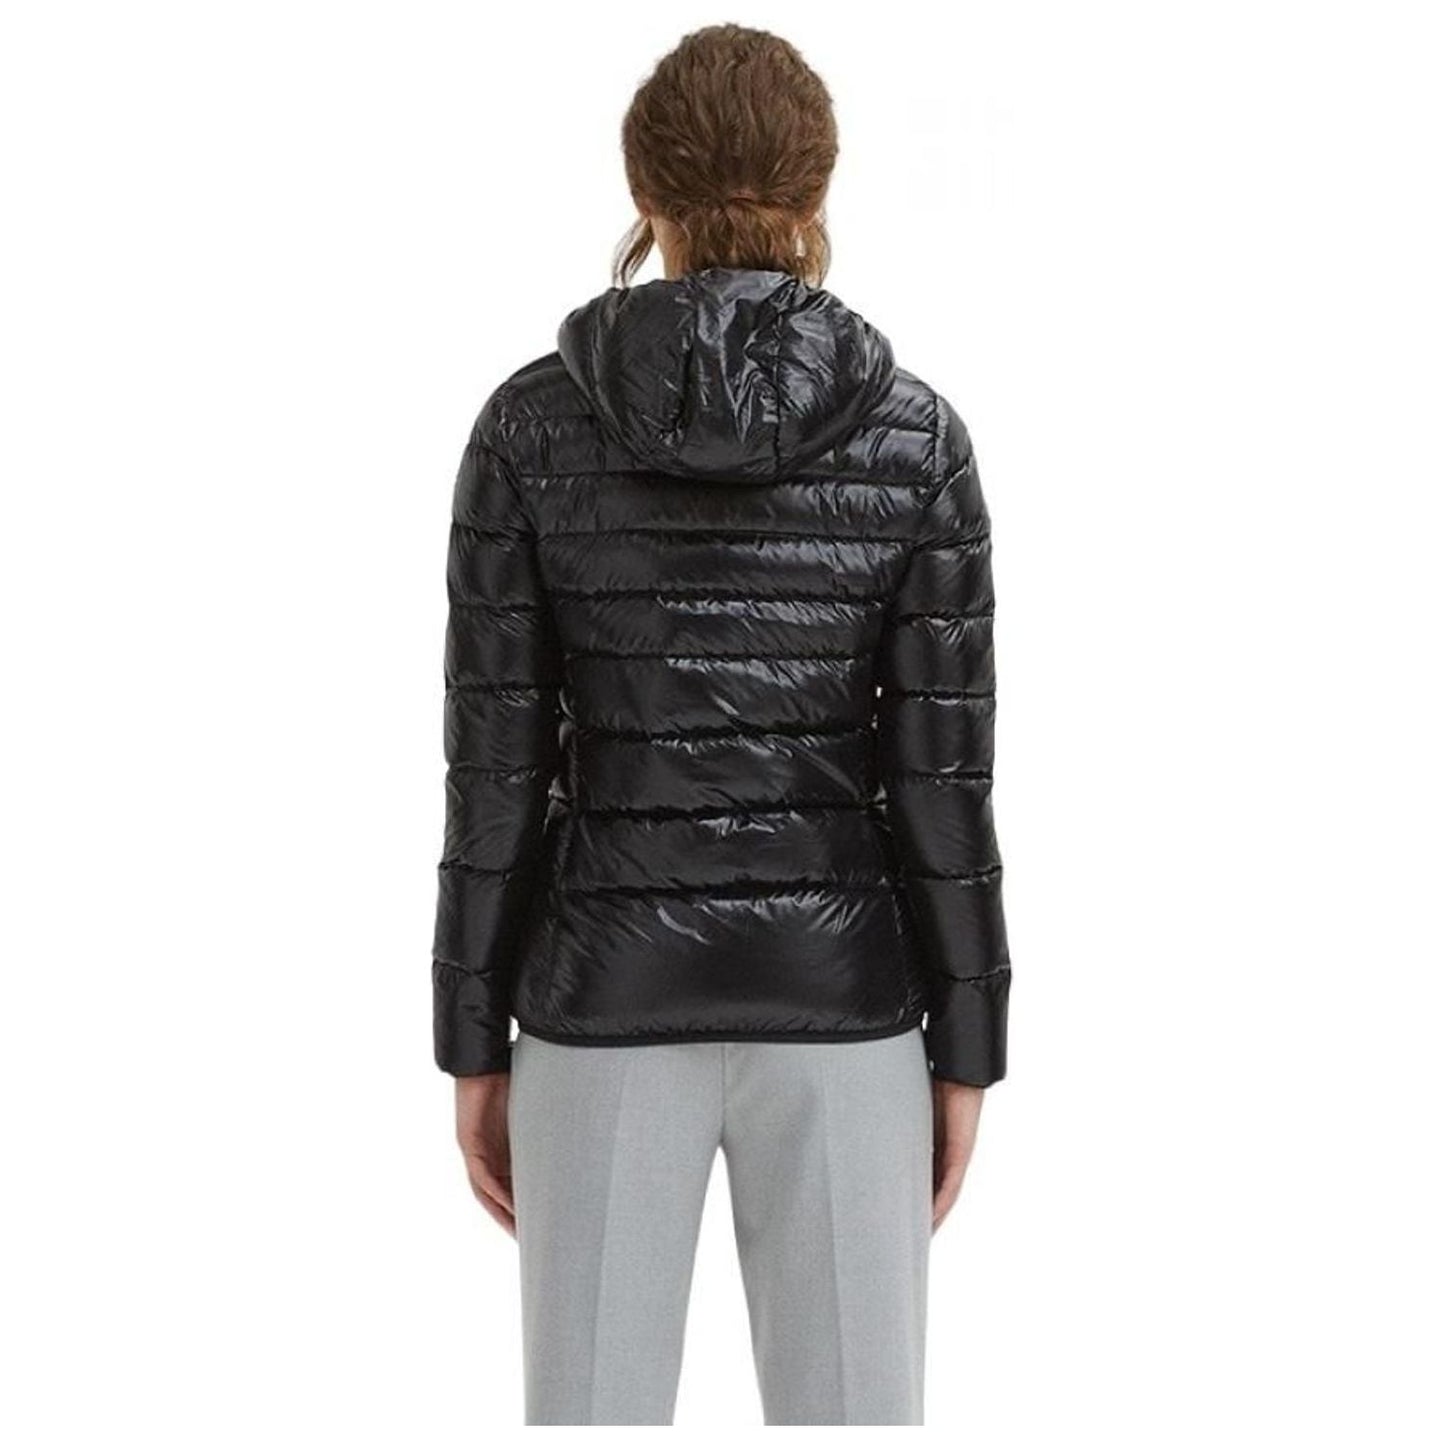 Centogrammi Ultra Light Water-Repellent Short Down Jacket black-nylon-jackets-coat-4 product-8590-116724014-9fdb8848-8b6.jpg